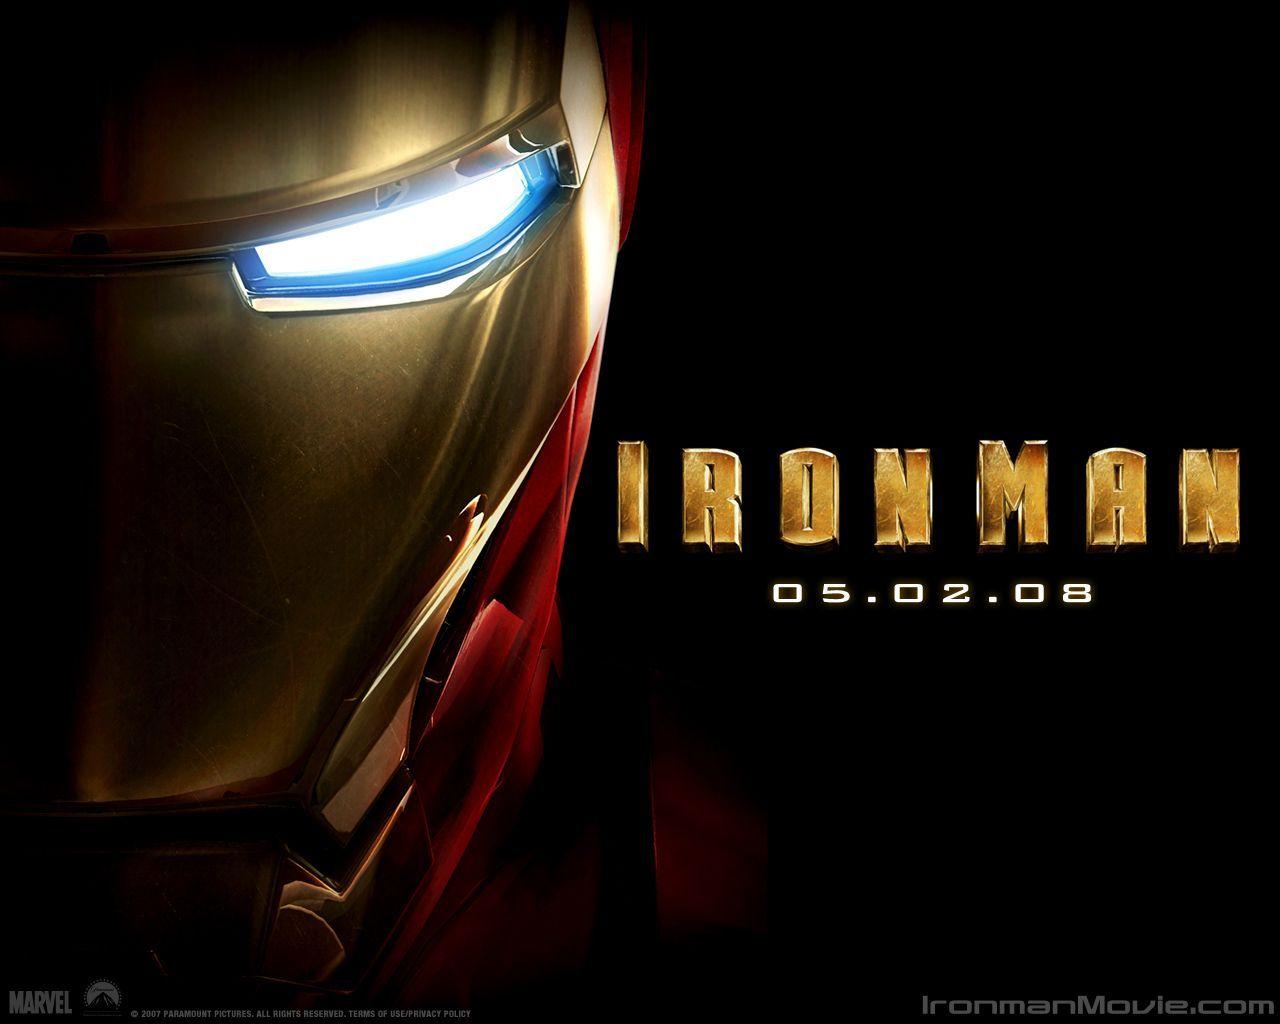 Iron Man Movie (id: 29110)